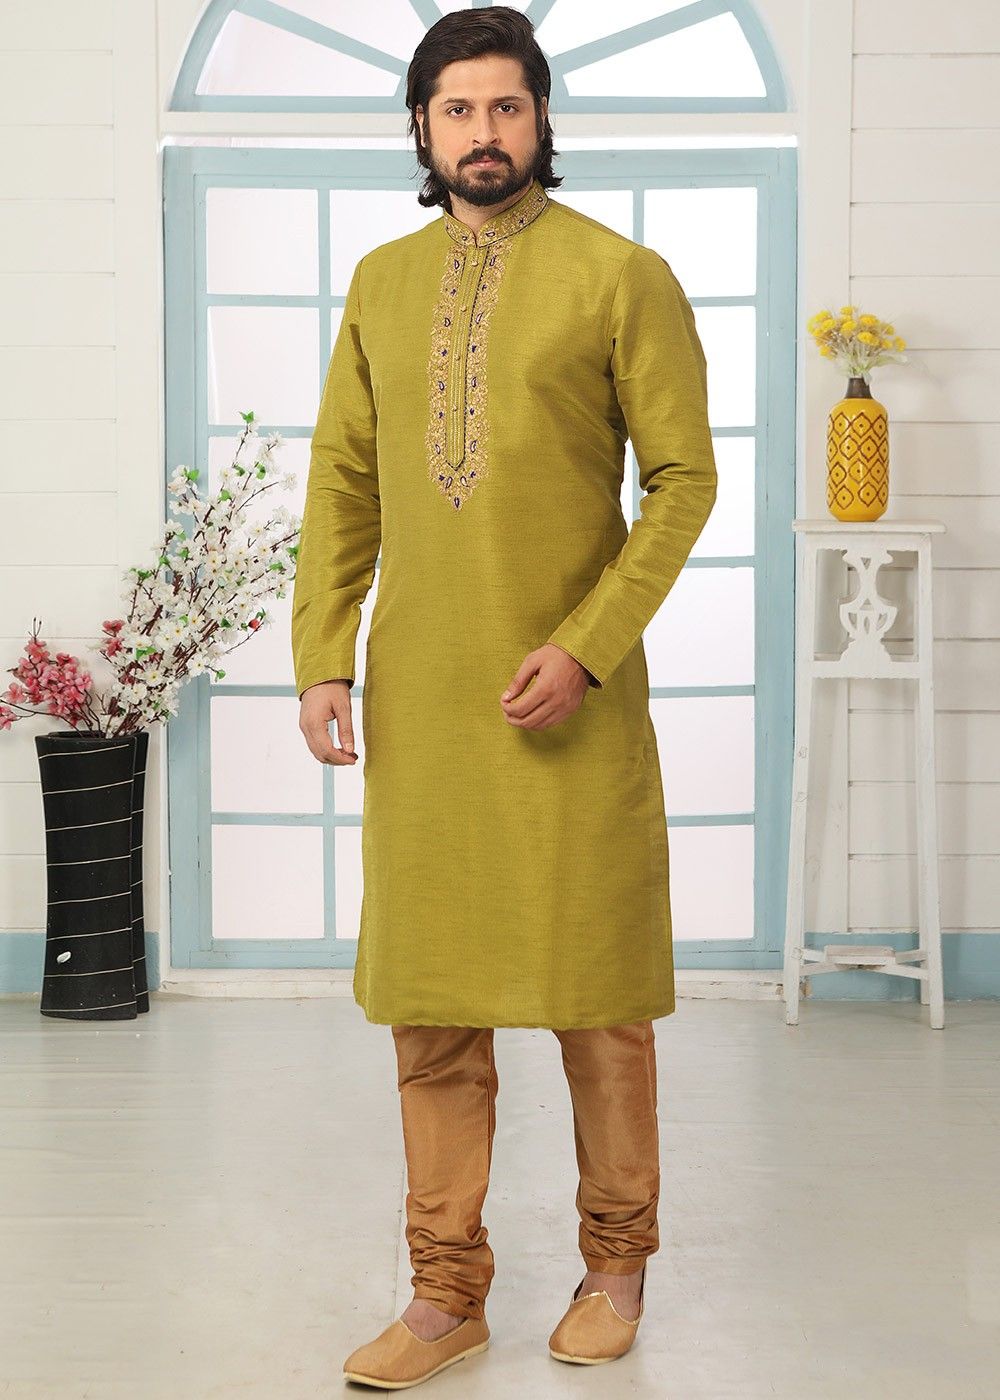 Buy Men's Traditional Indian Ethnic Wear Outfits Online UK: Mehendi Green